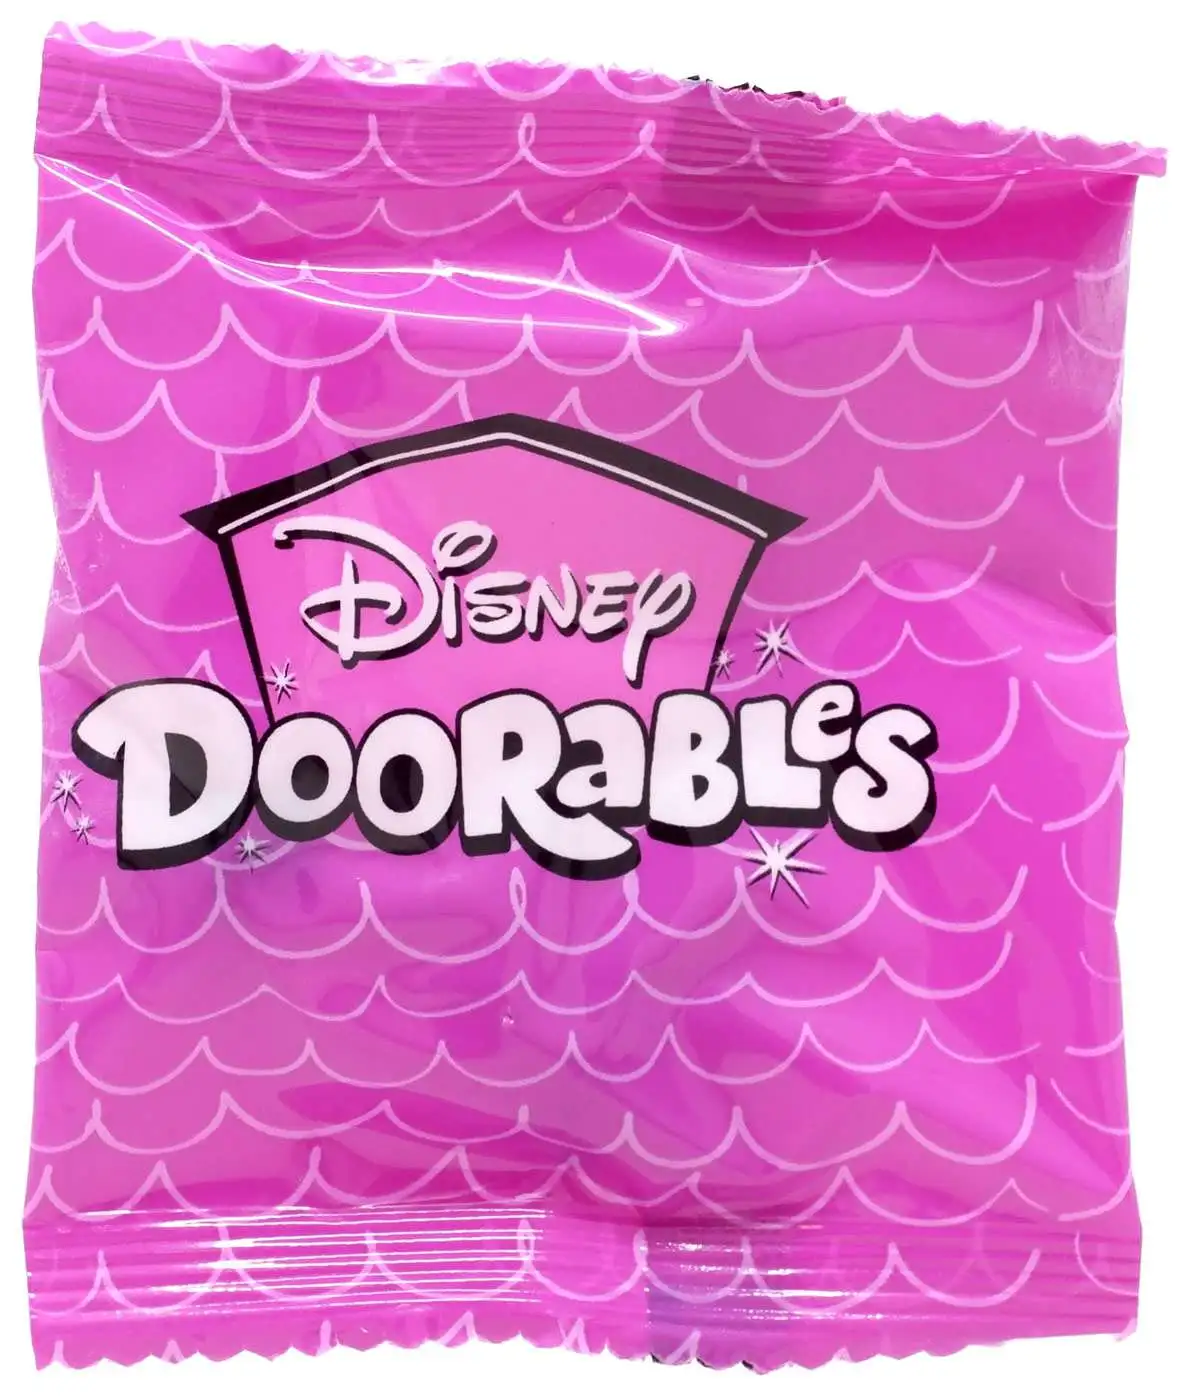 Disney Doorables Mini Peek Series 10 1 ct